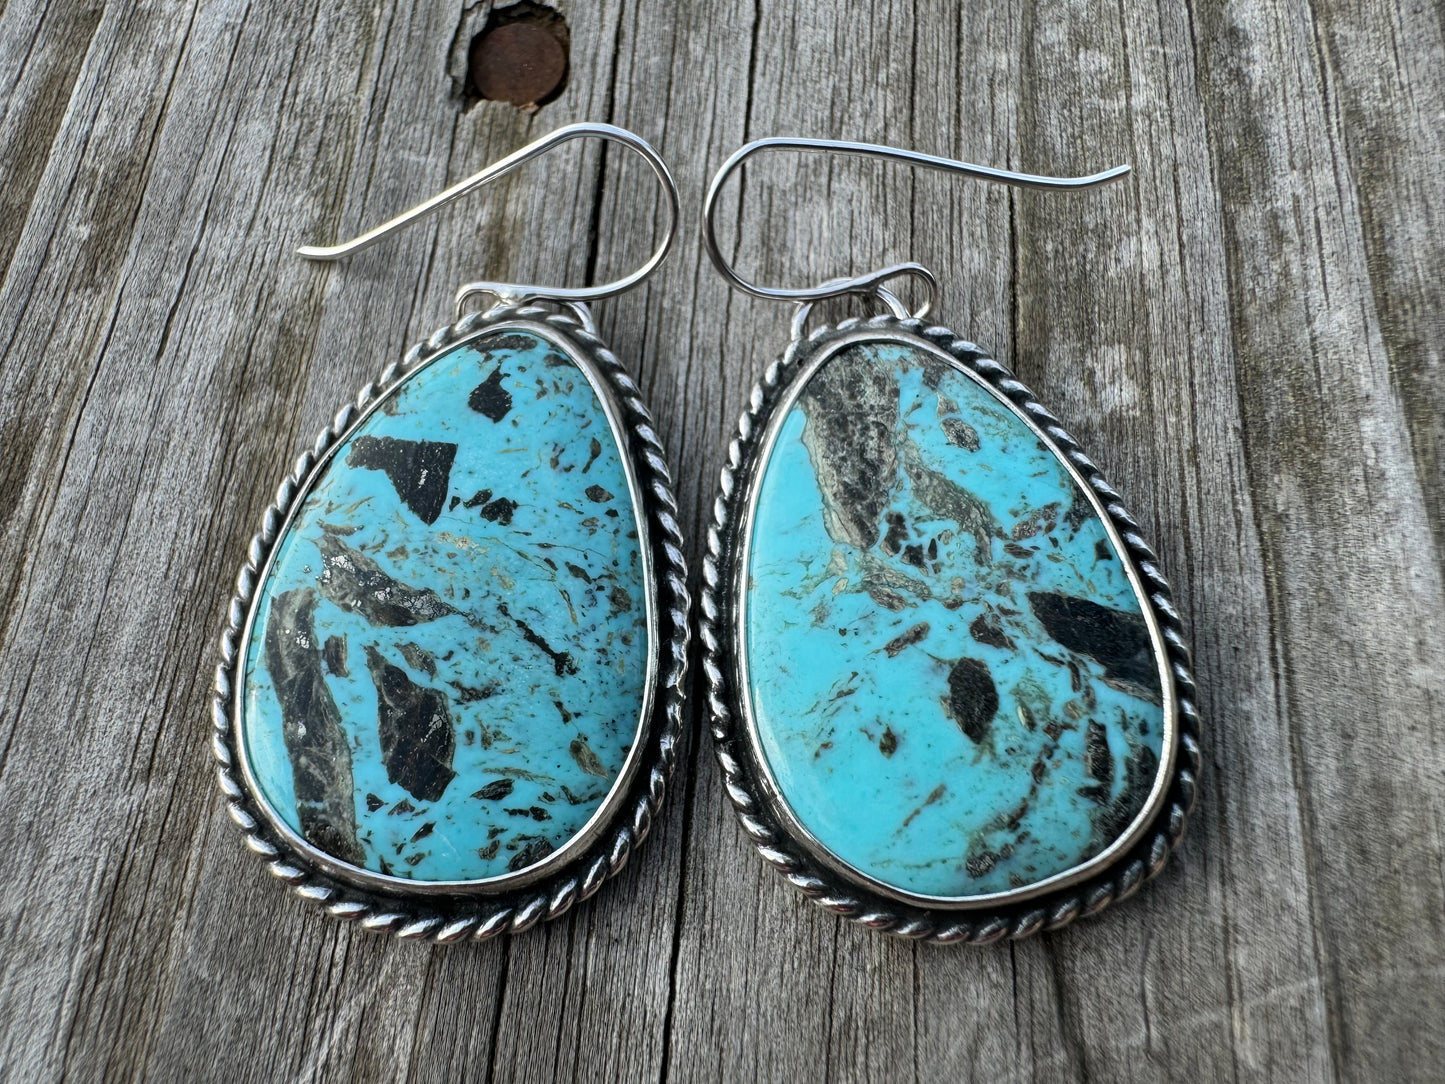 Smoky Blue Kingman turquoise earrings